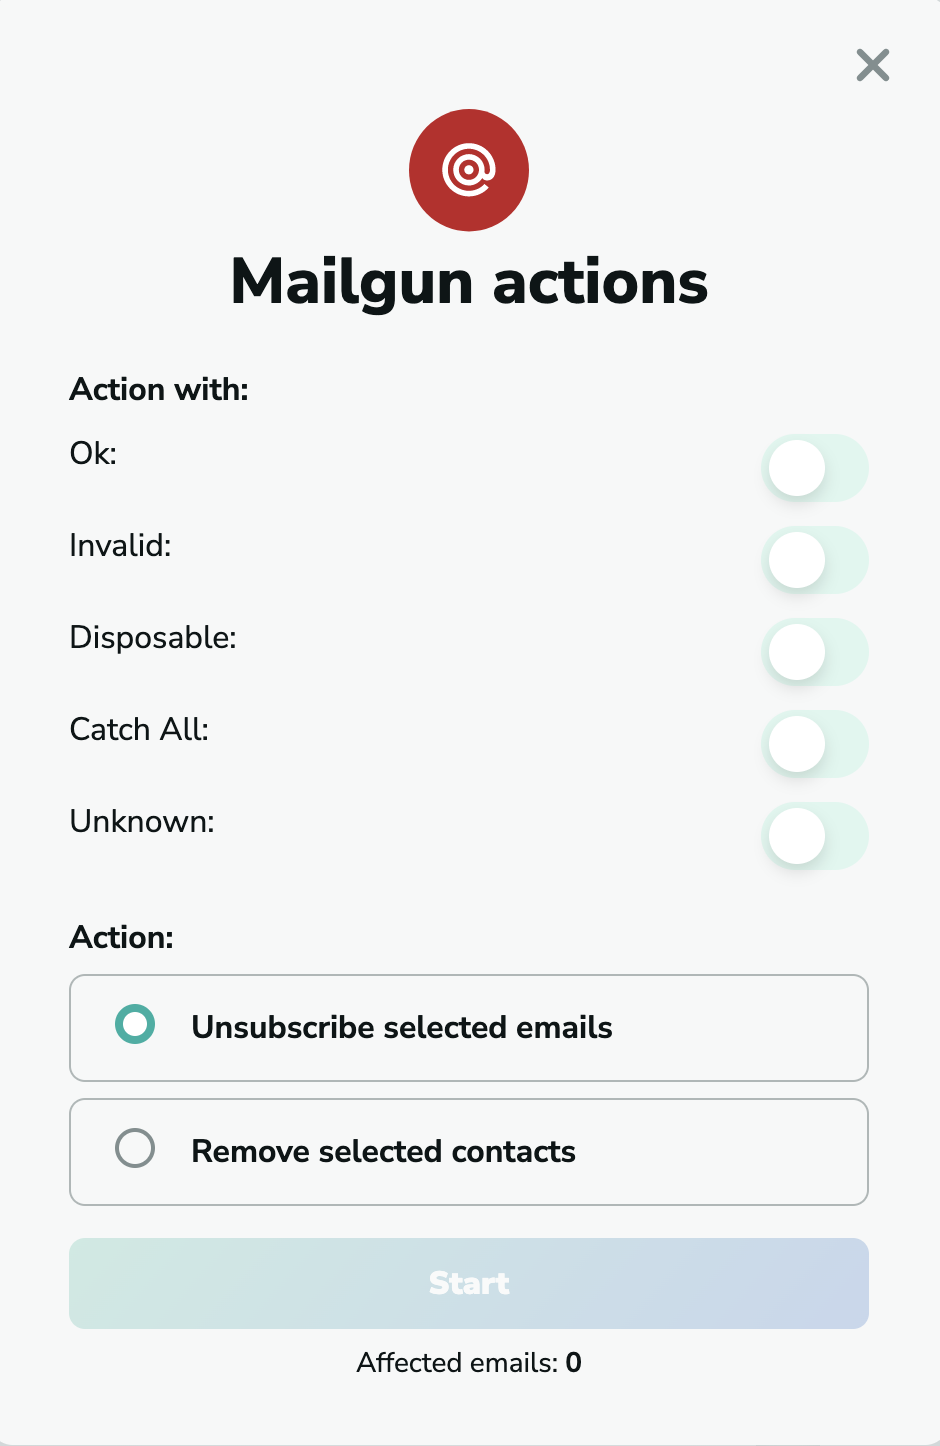 Mailgun actions in MillionVerifier